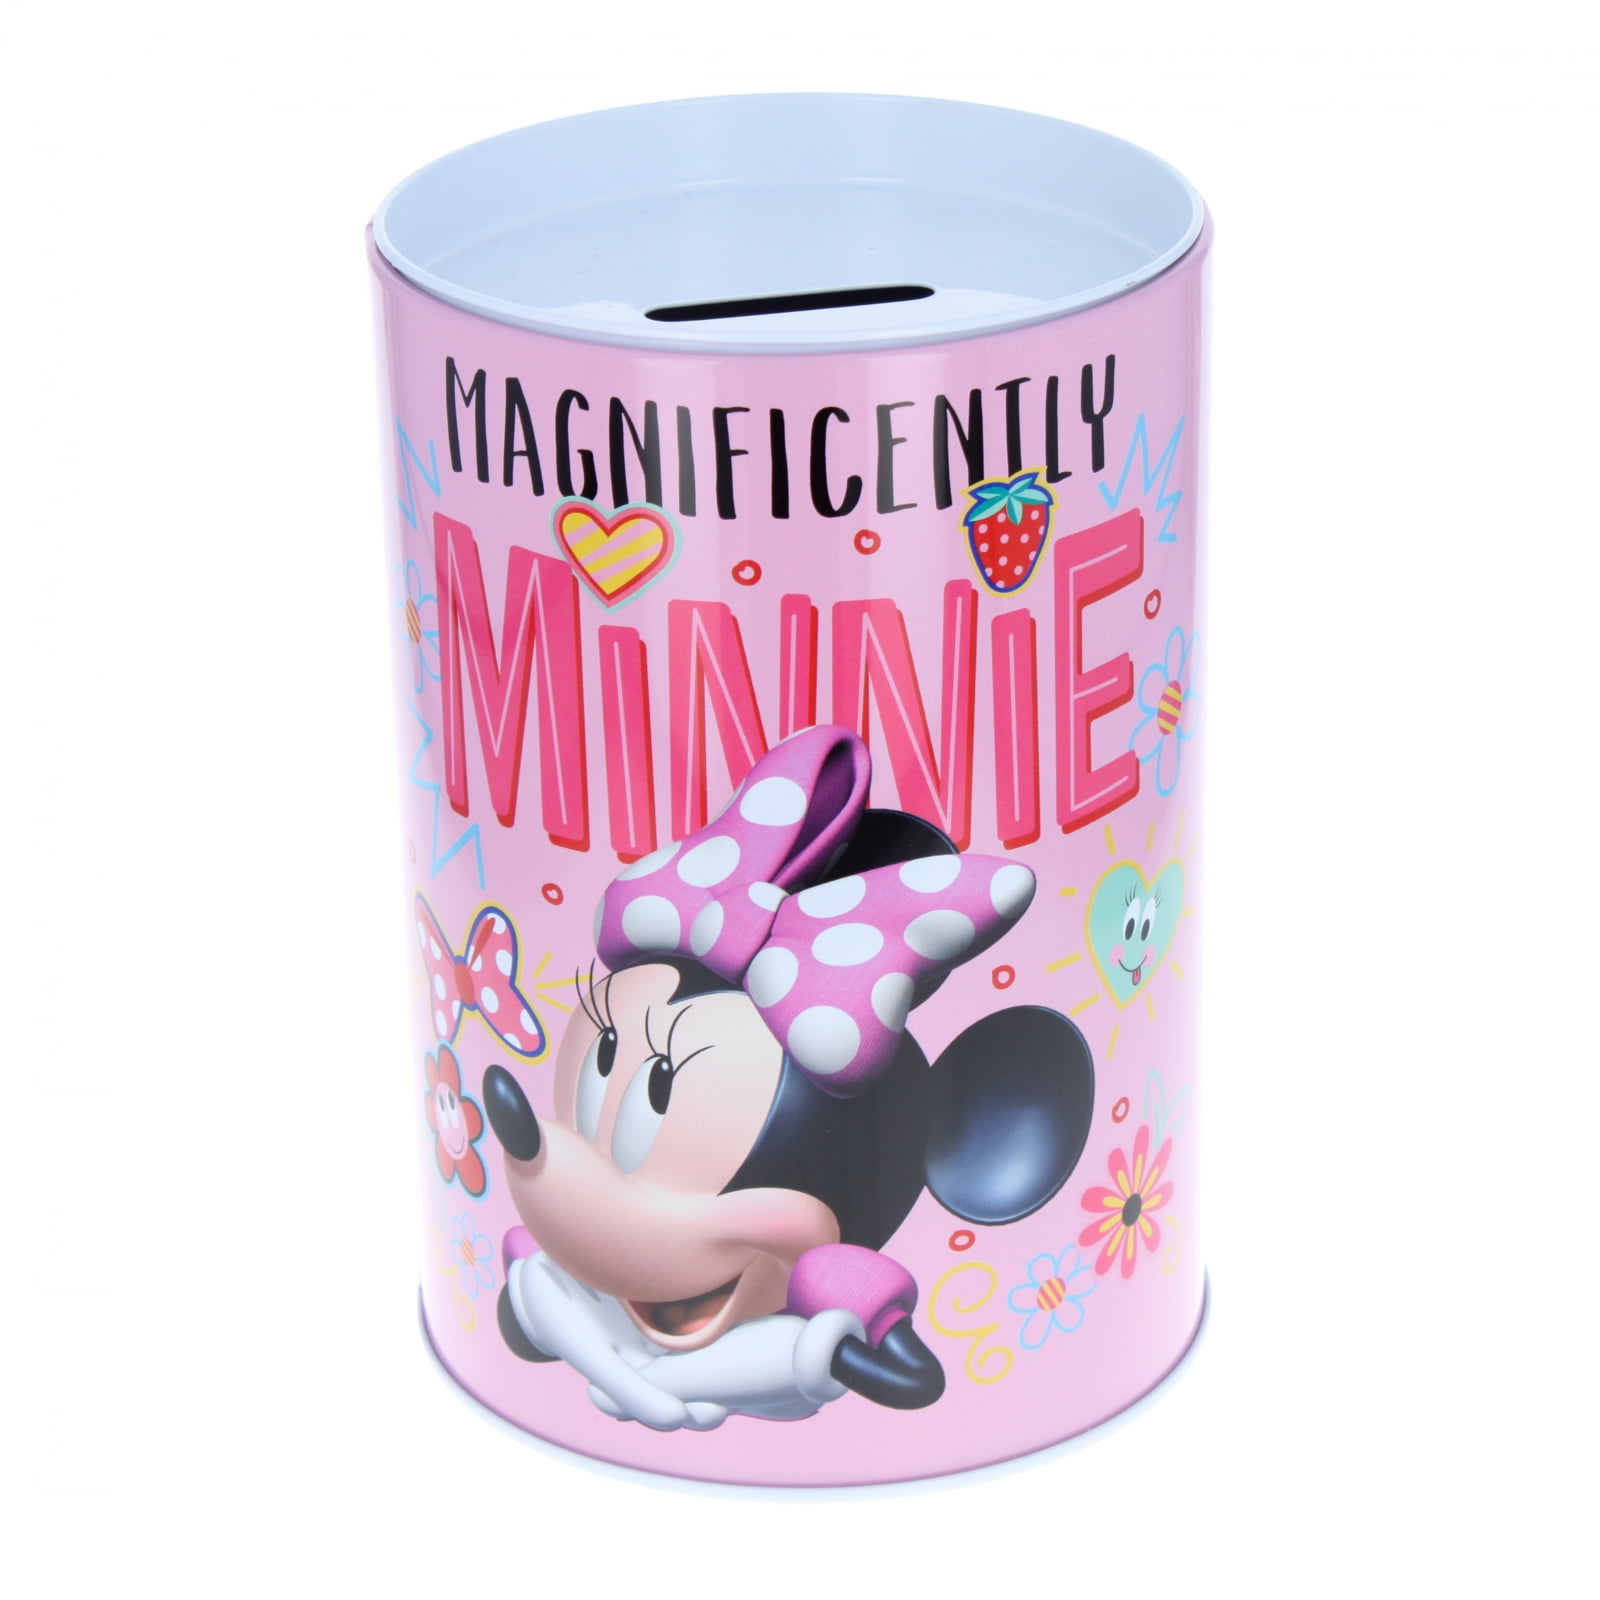 A27158 19cm Disney Minnie Mouse money box/bank 